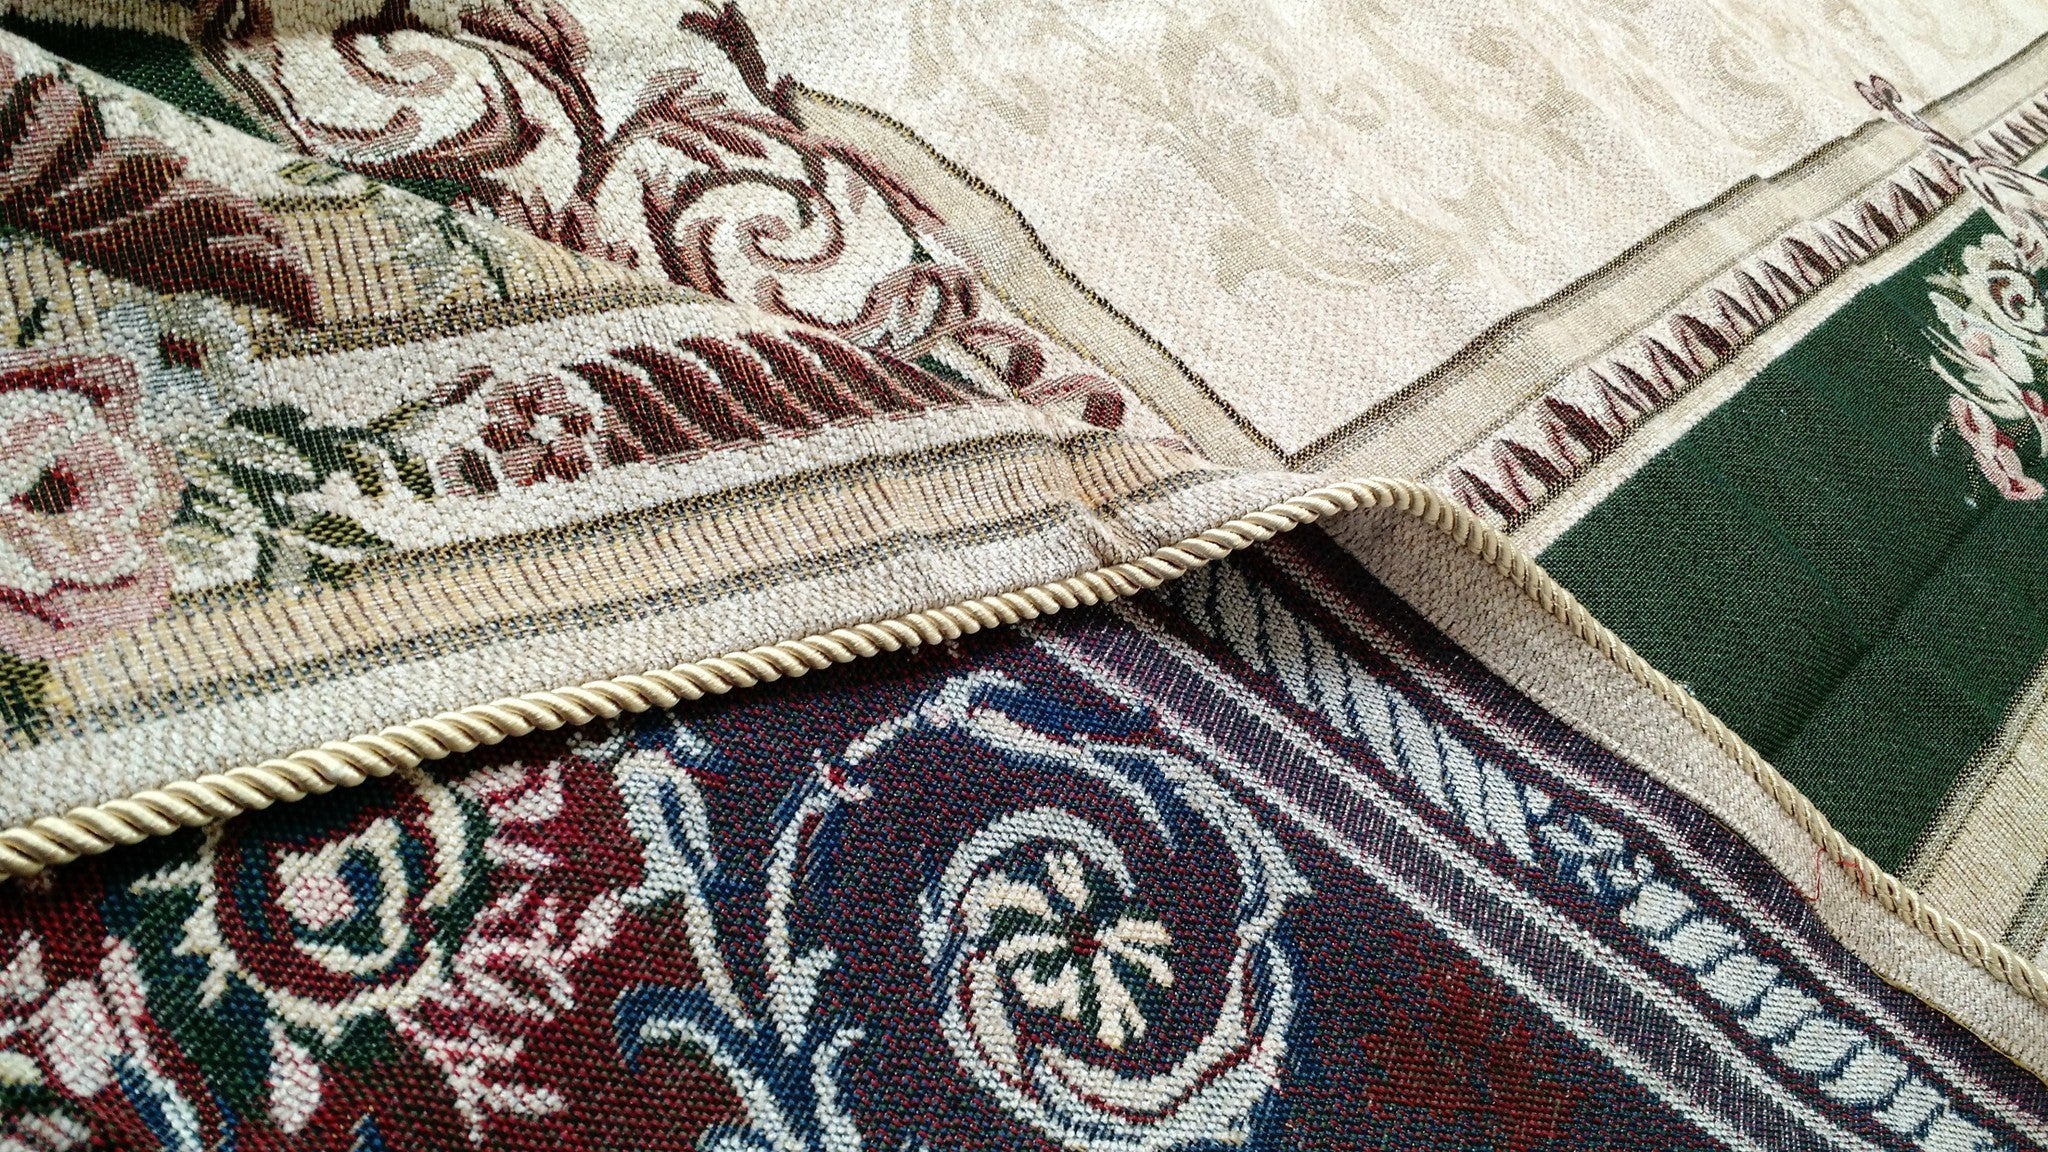 Tache Chenille Green Forest Tapestry Bedspread Set Twin (DSC0012-C) - Tache Home Fashion